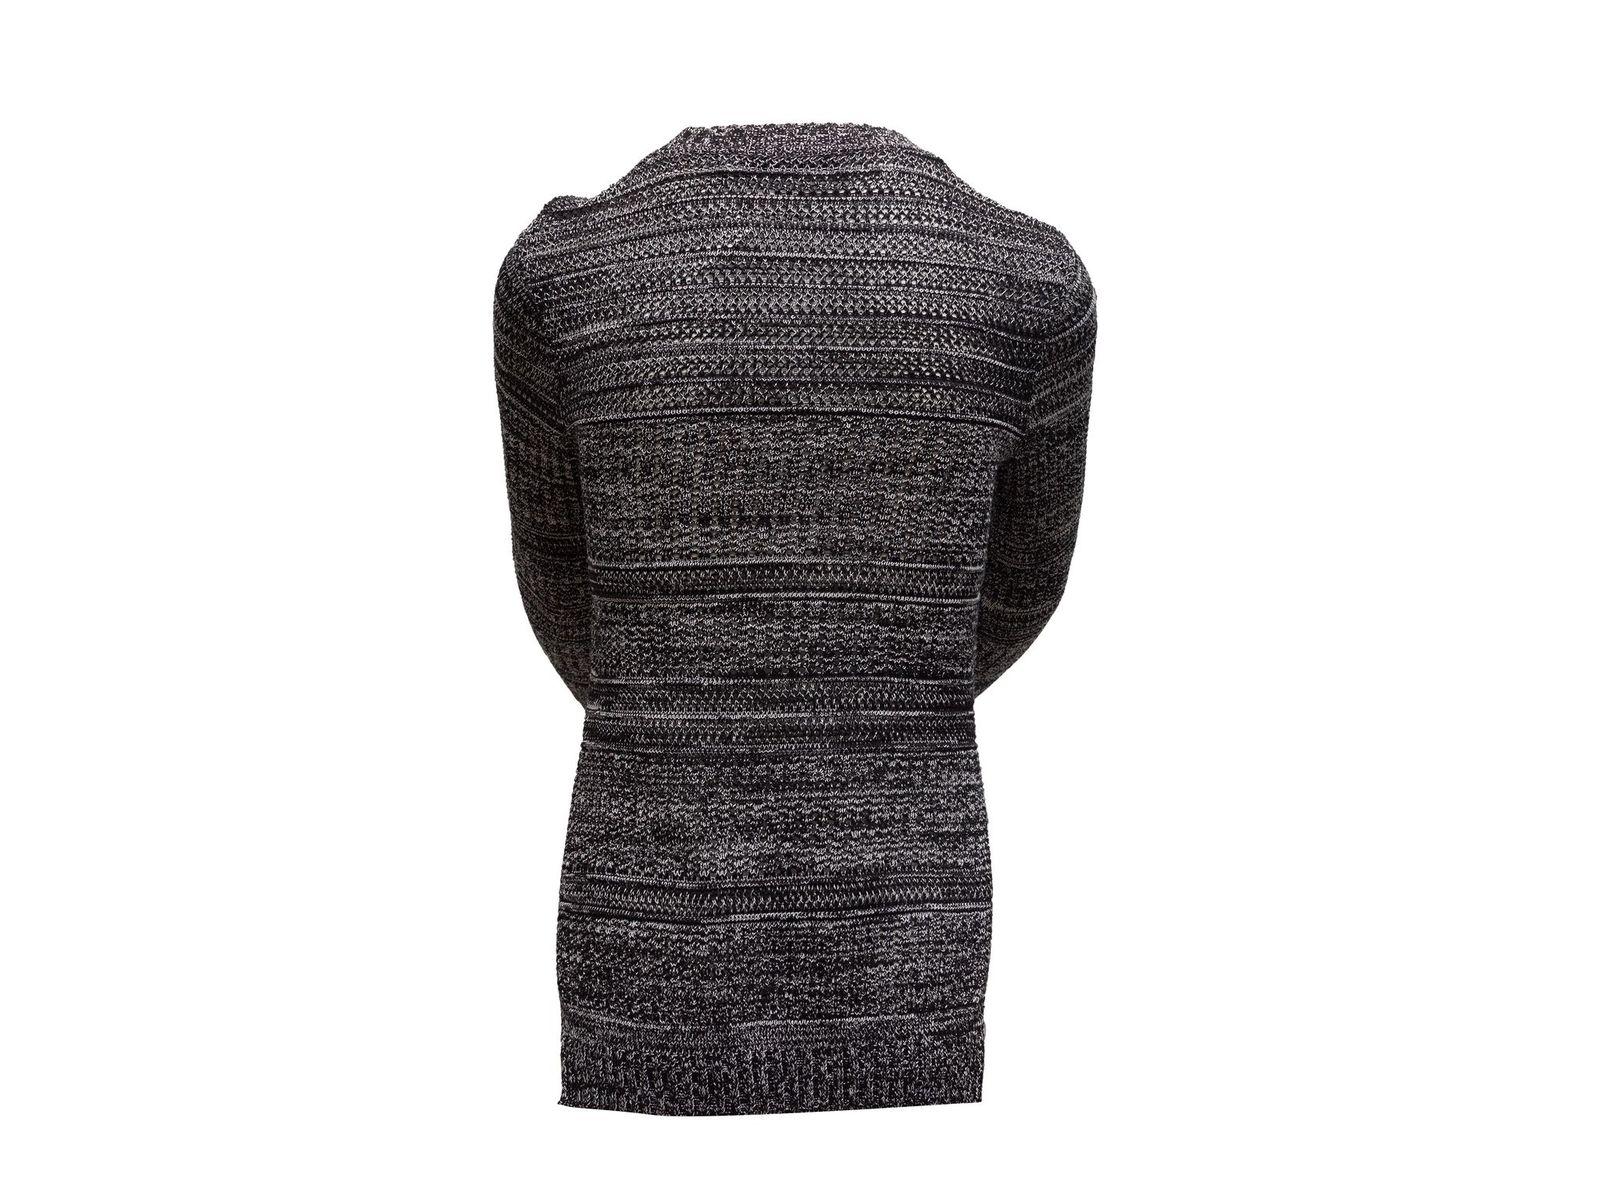 Proenza Schouler Black & White Silk-Blend Melange Sweater 5